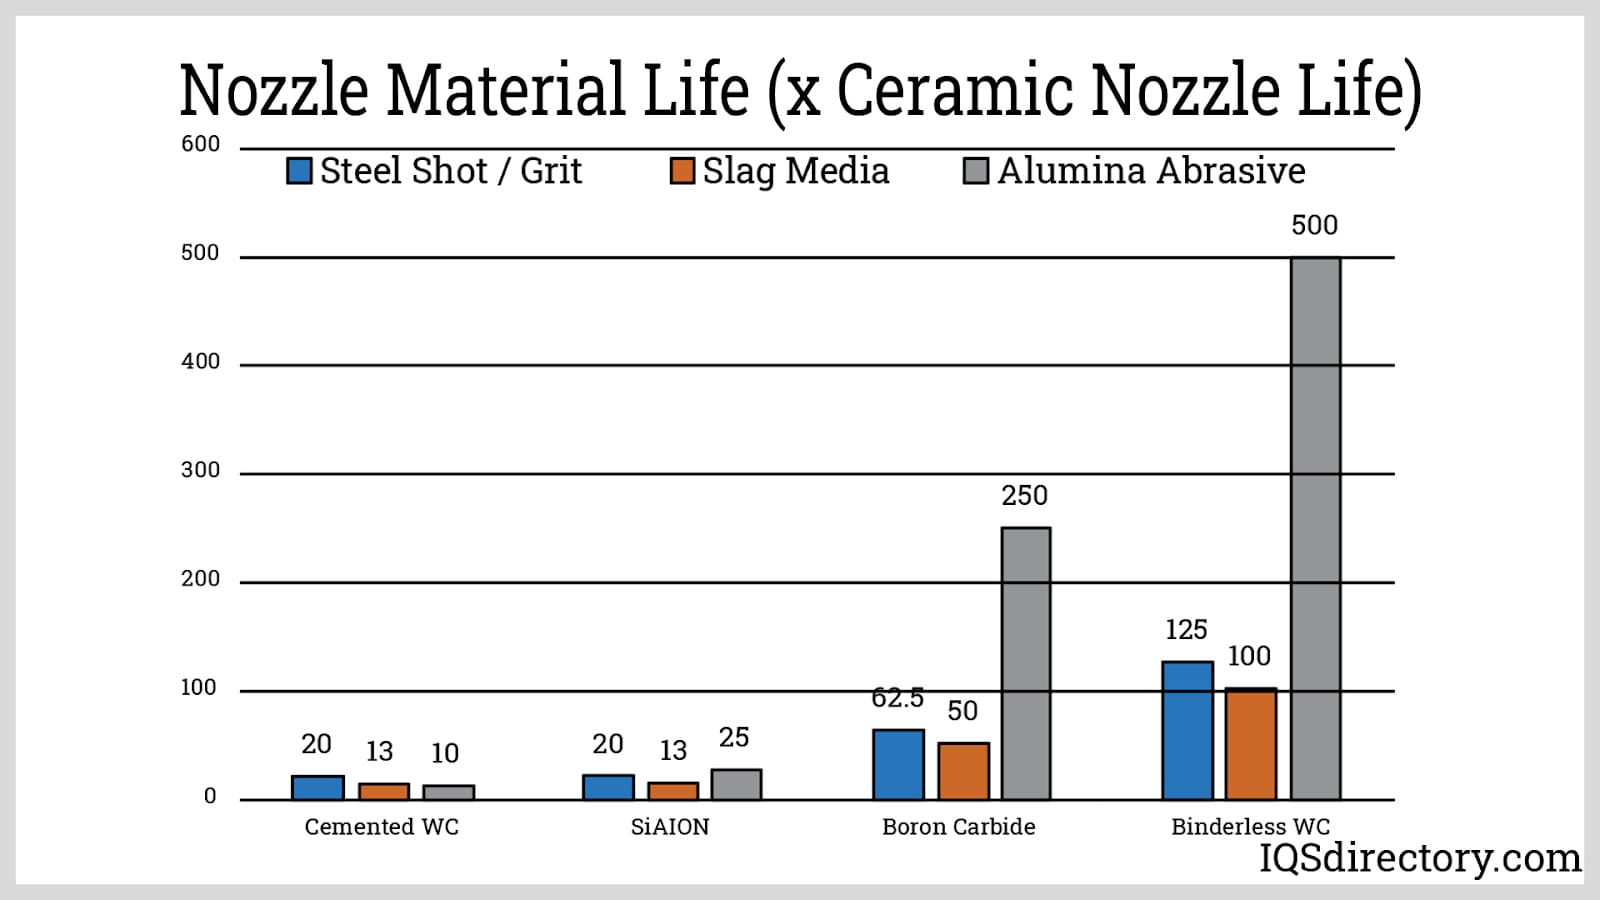 Nozzle Material Life (x Ceramic Nozzle Life)